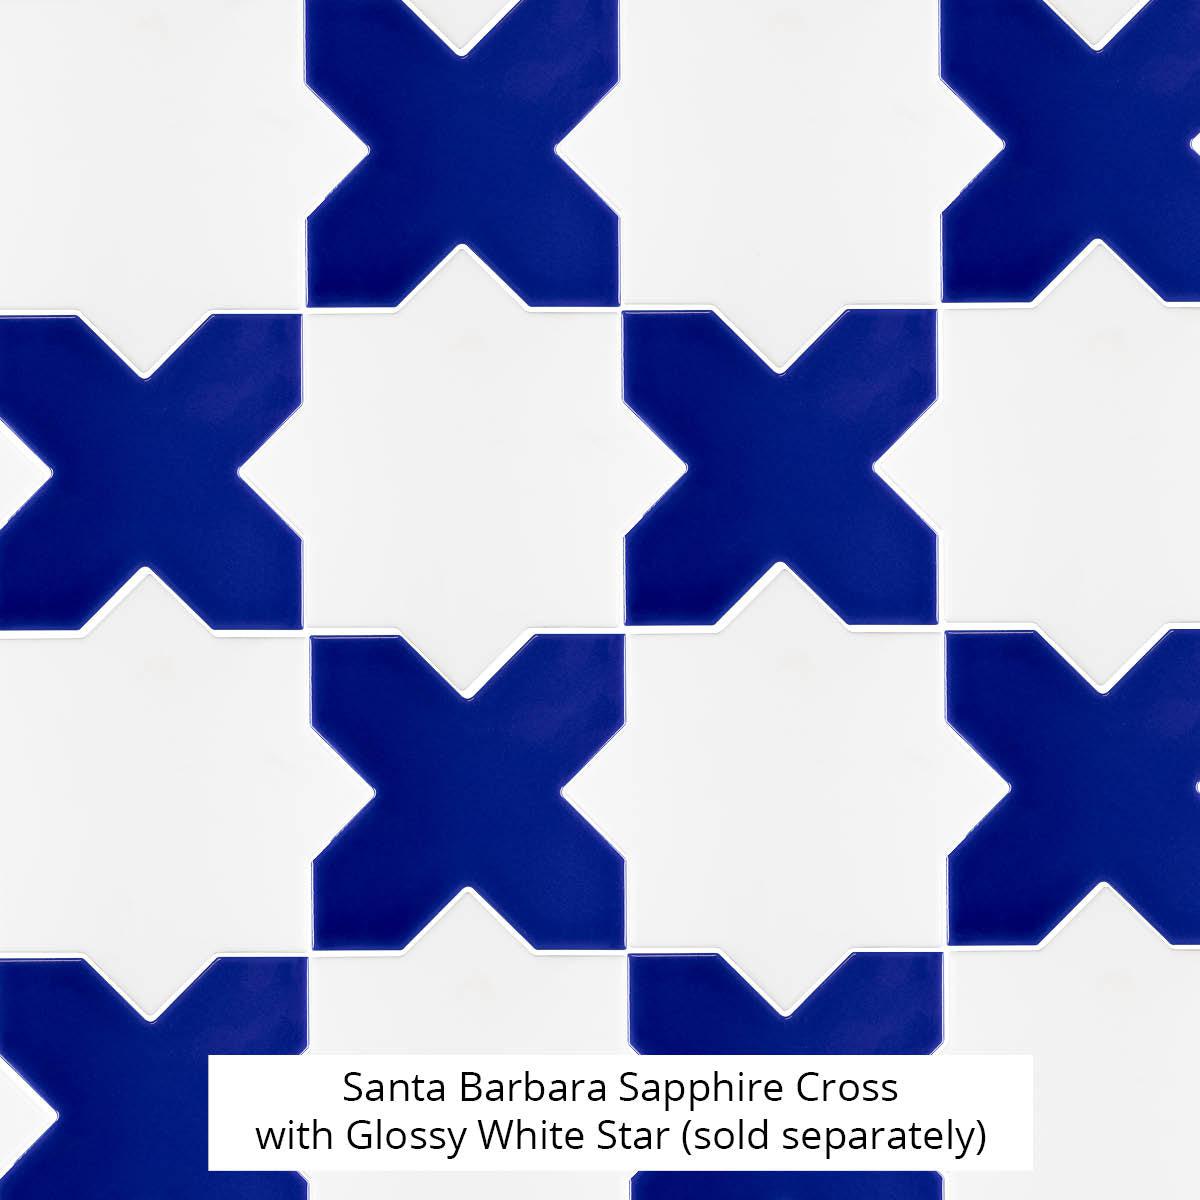 Santa Barbara Royal Blue Cross